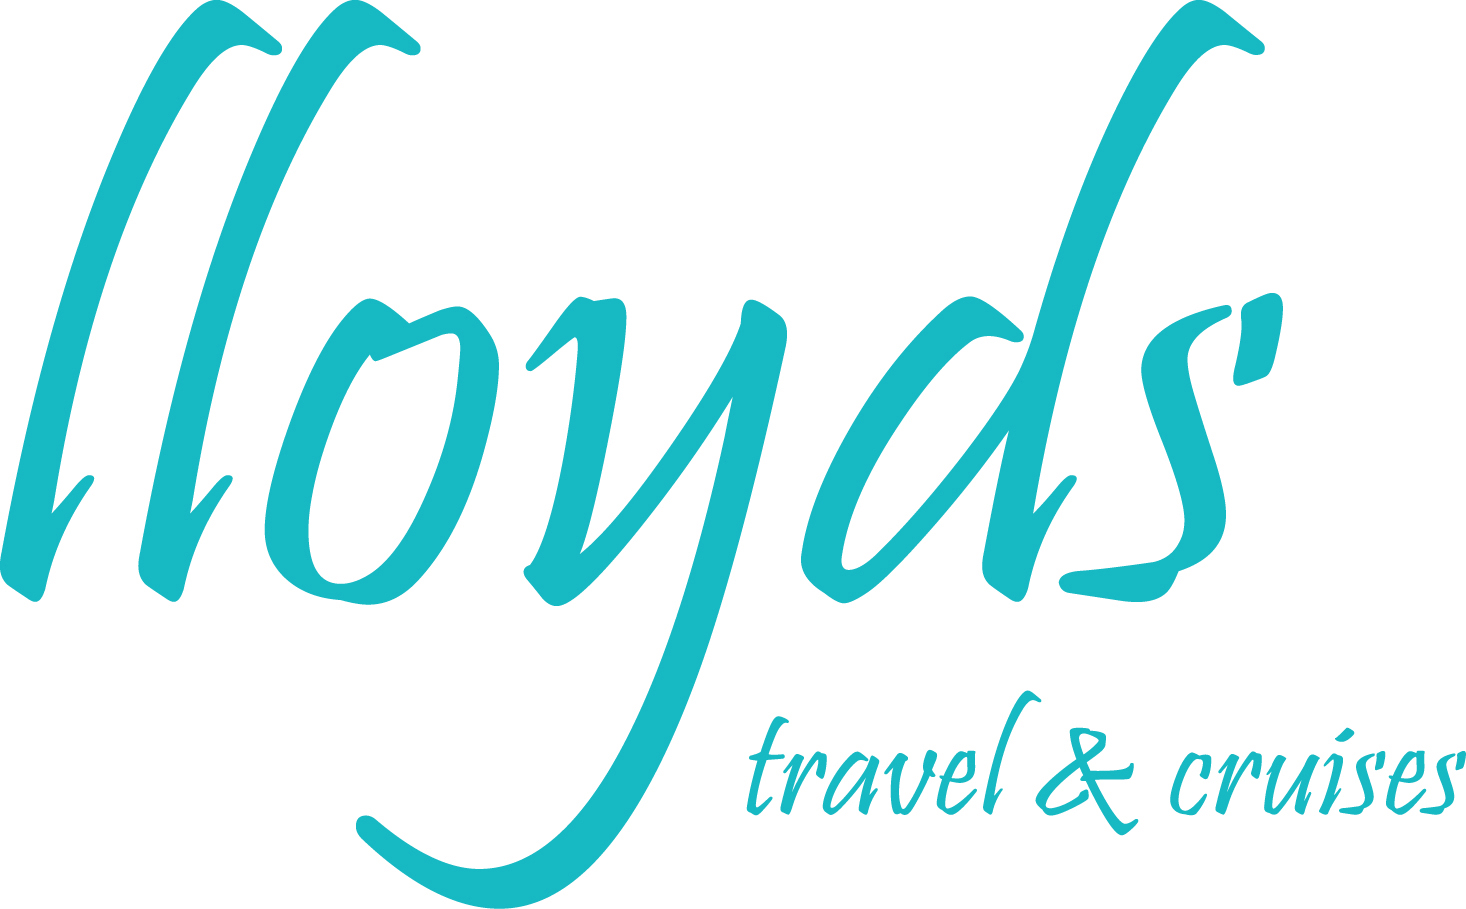 Lloyds Travel & Cruises Ltd.